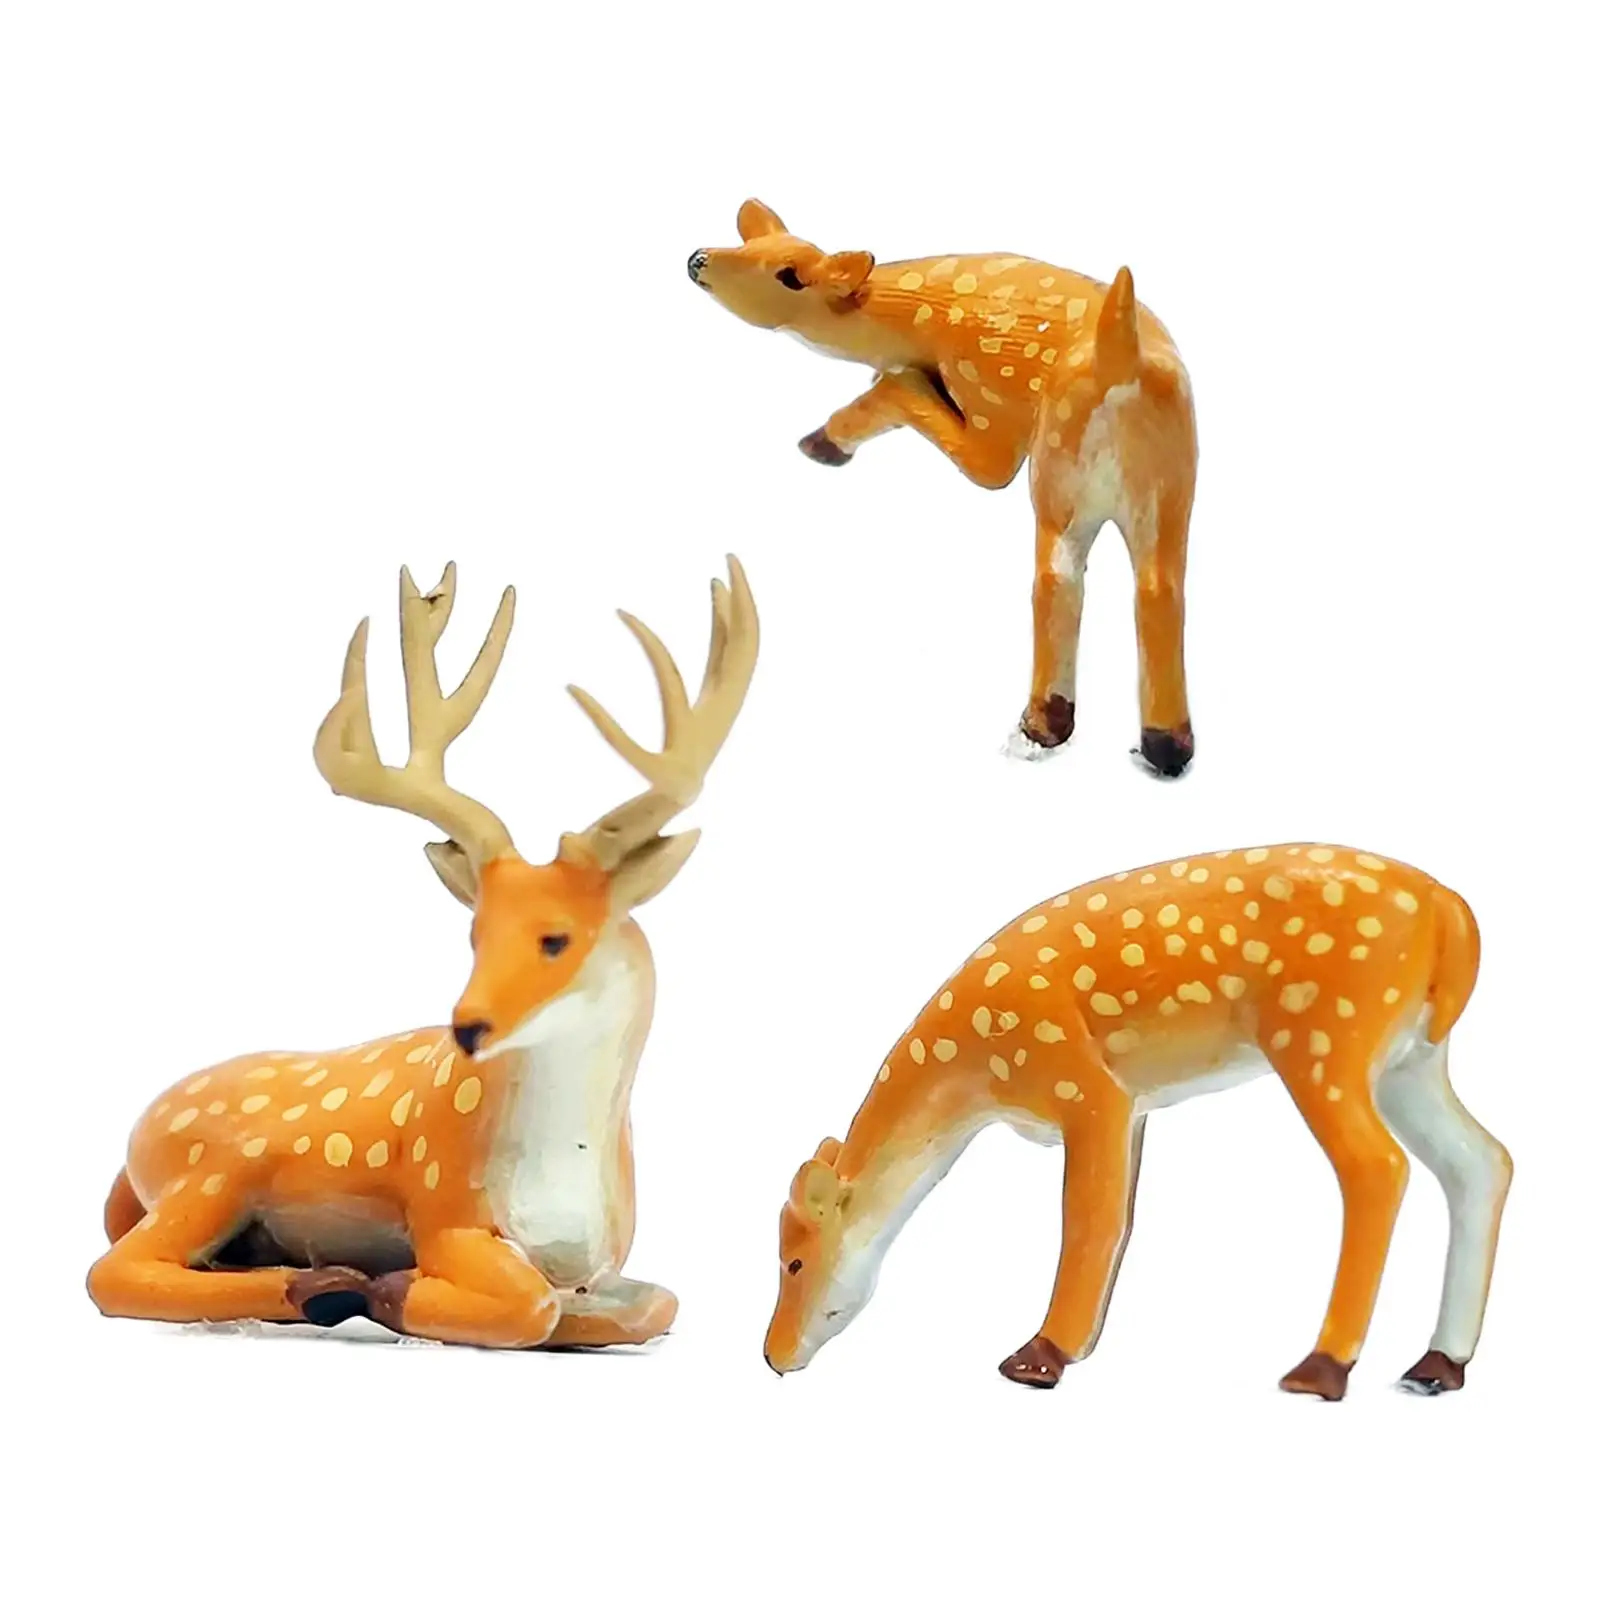 3 Pieces 1/64 Scale Deer Figures for Projects Decor Miniature Scenes Decor